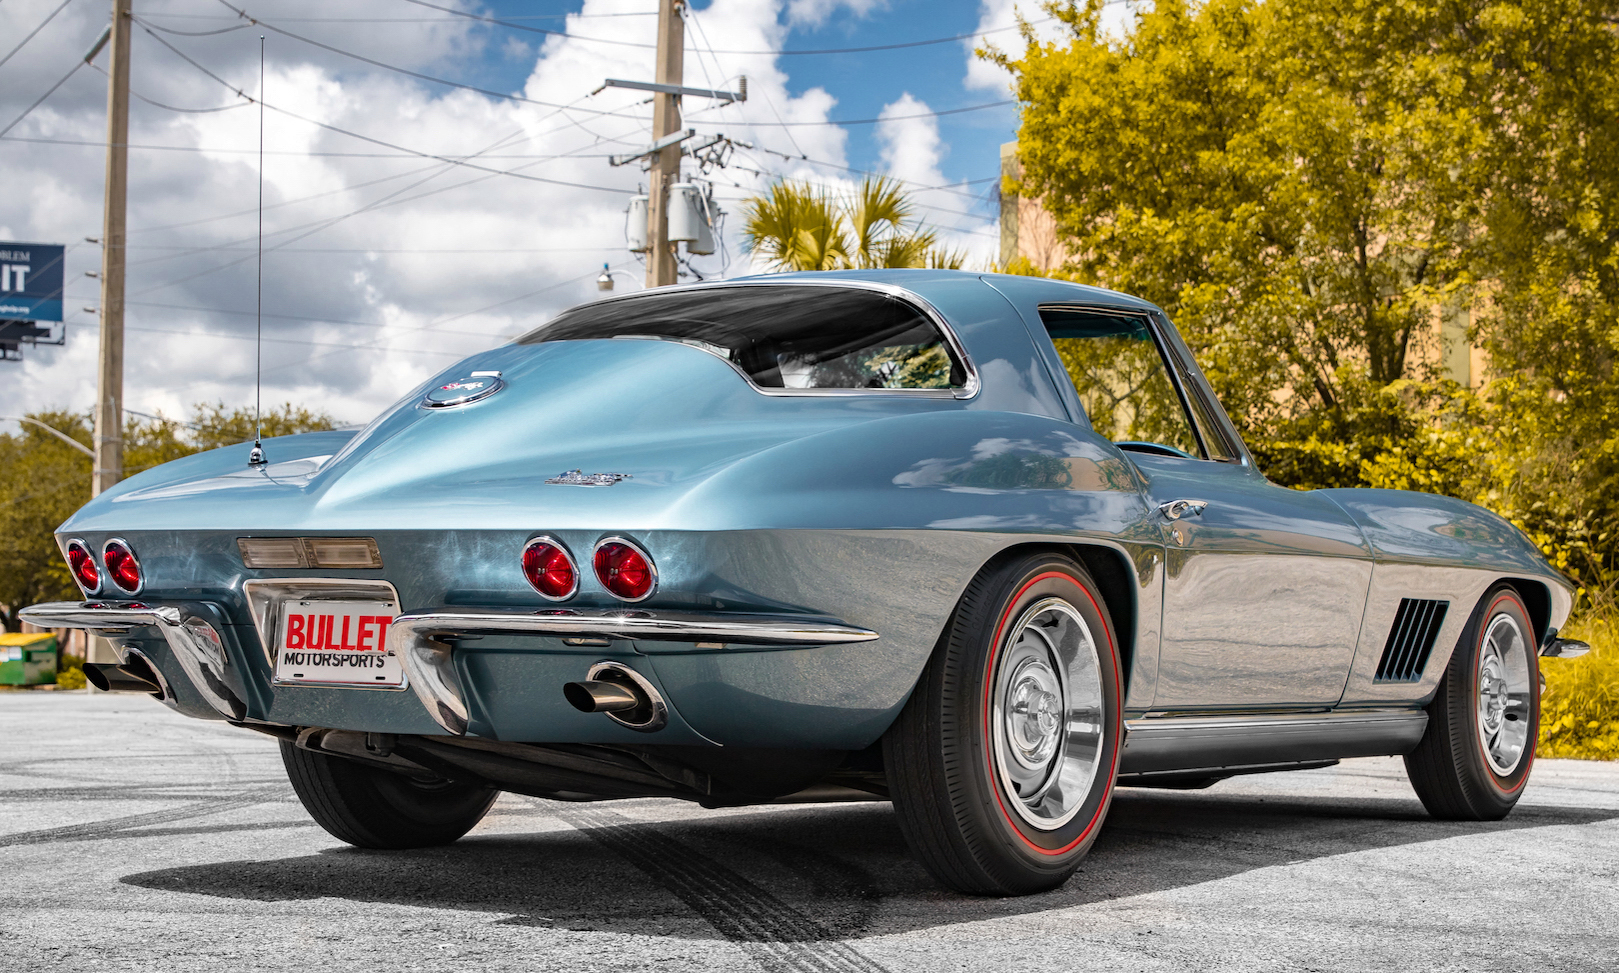 1967 Corvette Coupe in Lynndale Blue